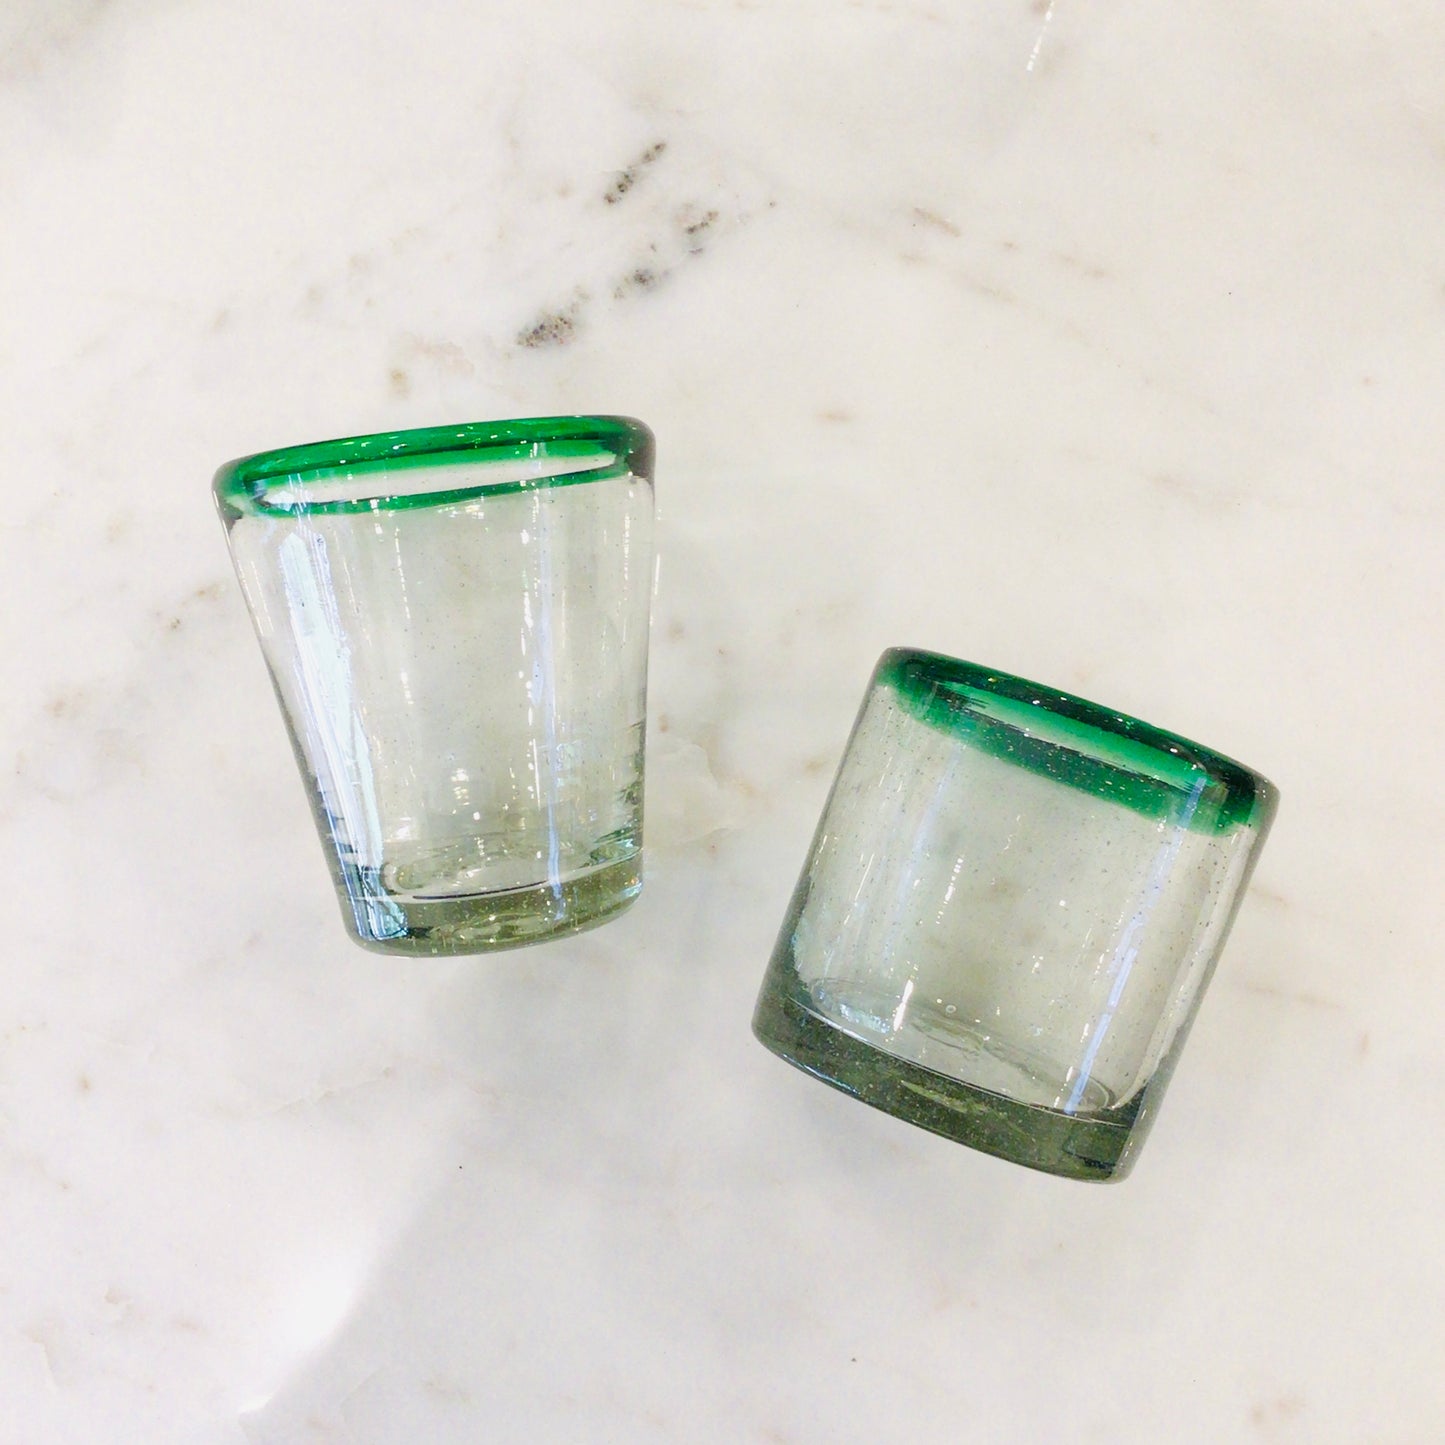 Mexican Glass V-shaped Tumbler - Green Rim